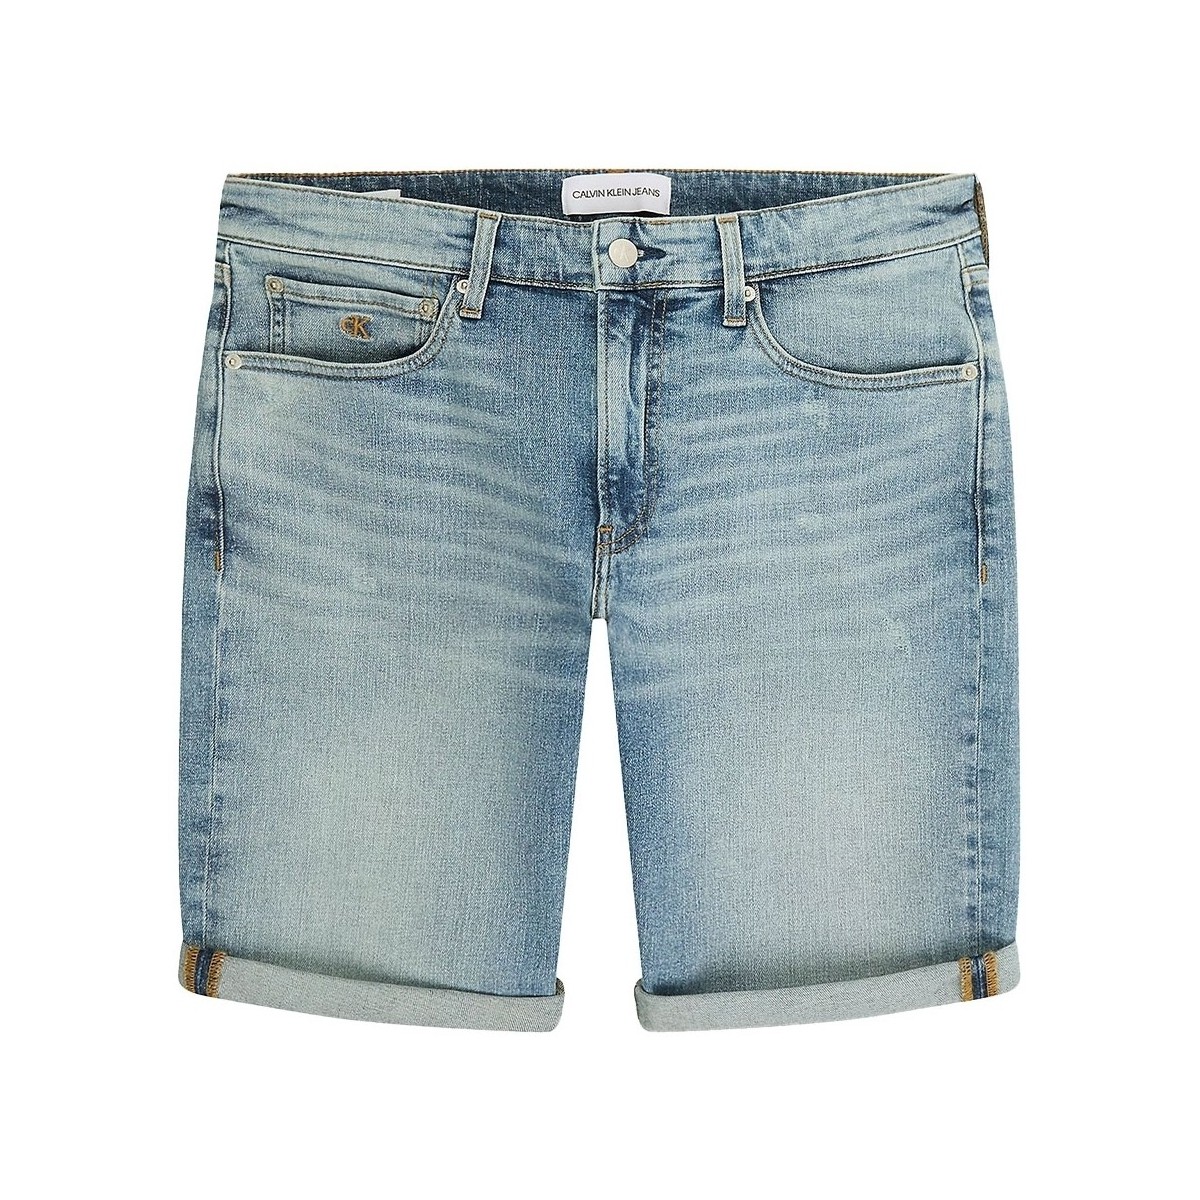 Vêtements Homme Shorts / Bermudas Calvin High Klein Culotte grande taille en dentelle Noir Short en jean  ref 52715 1AA Denim Light Bleu